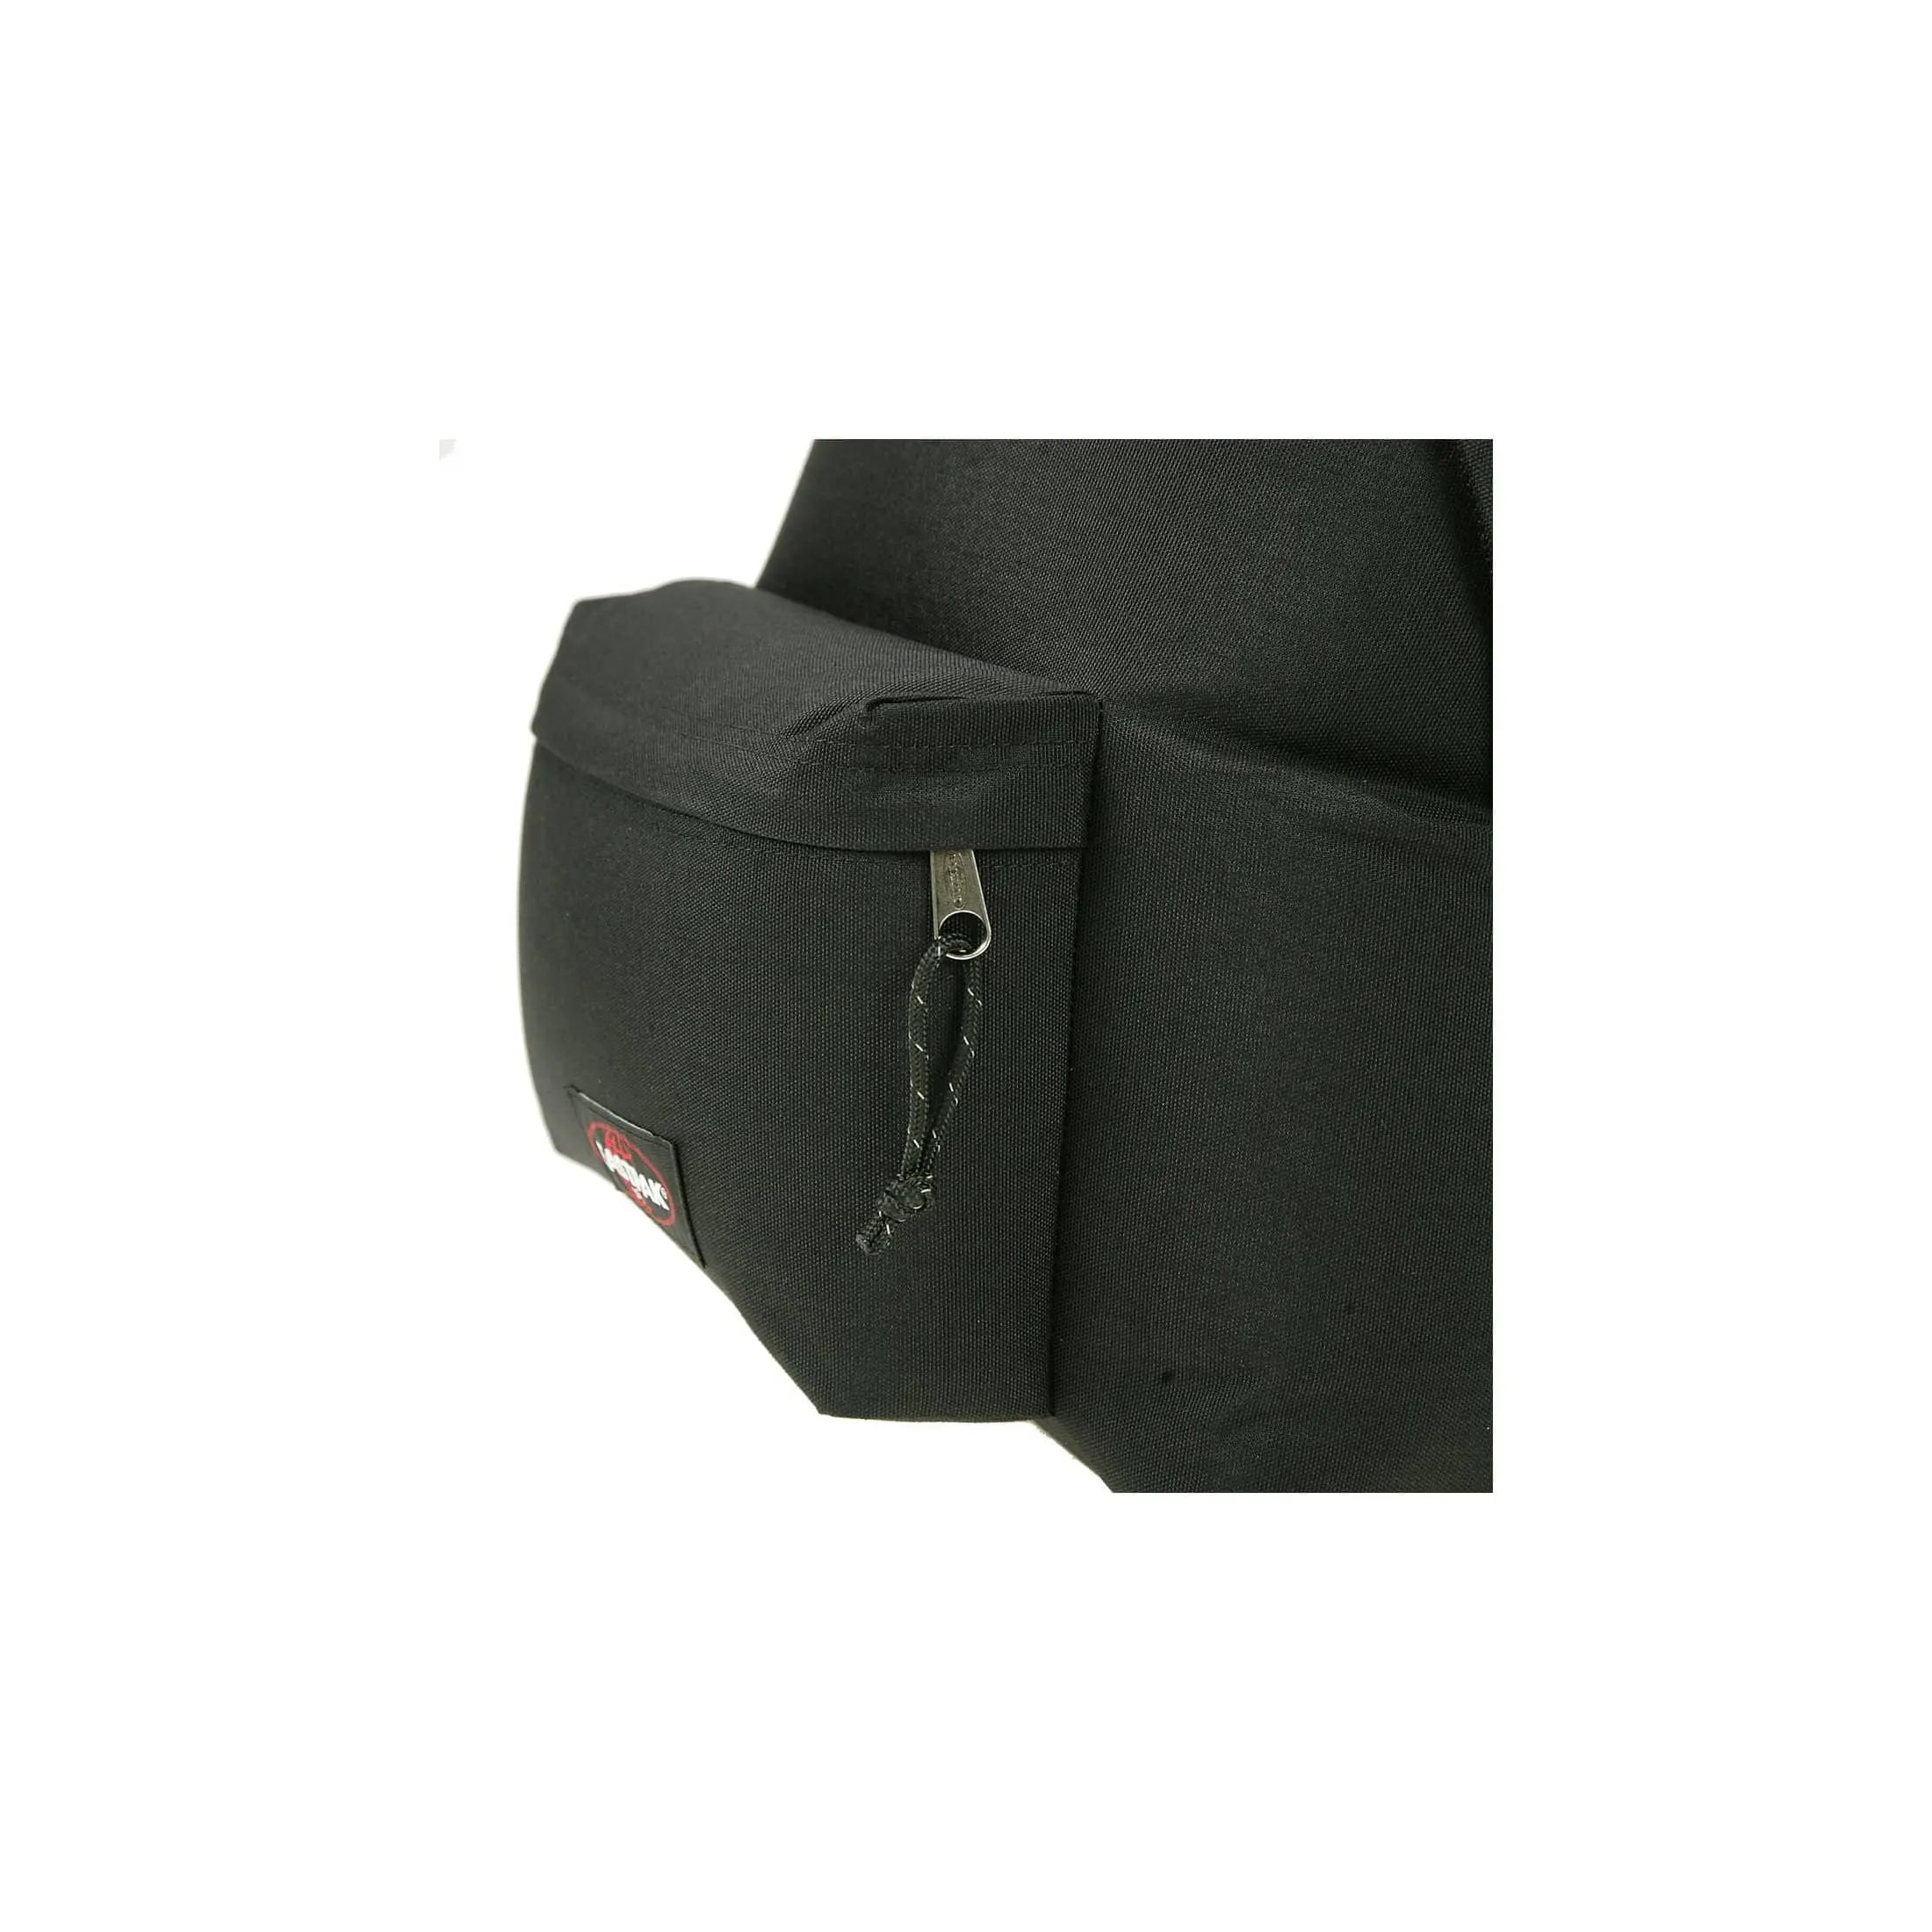 Eastpak Authentic Padded Pak'r leisure backpack 41 cm - ResponsGreige